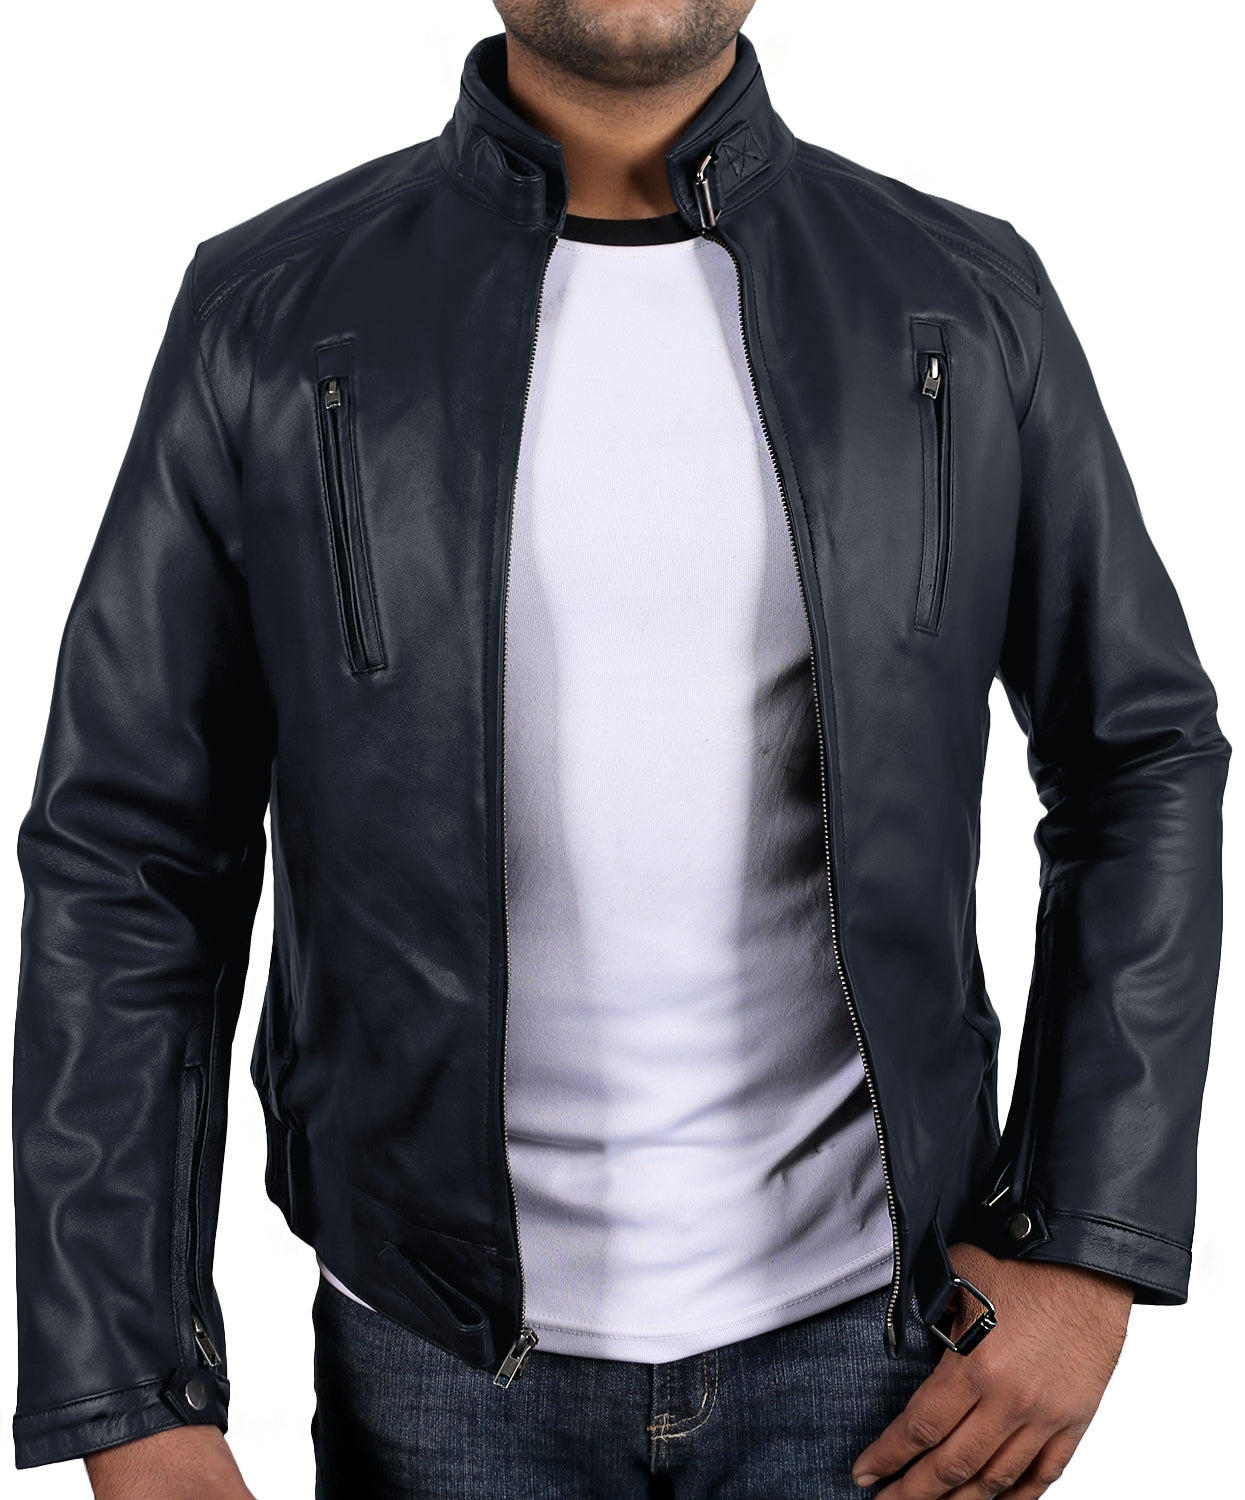 Leather Jackets Hub Mens Genuine Lambskin Leather Jacket (Black, Racer Jacket) - 1501314